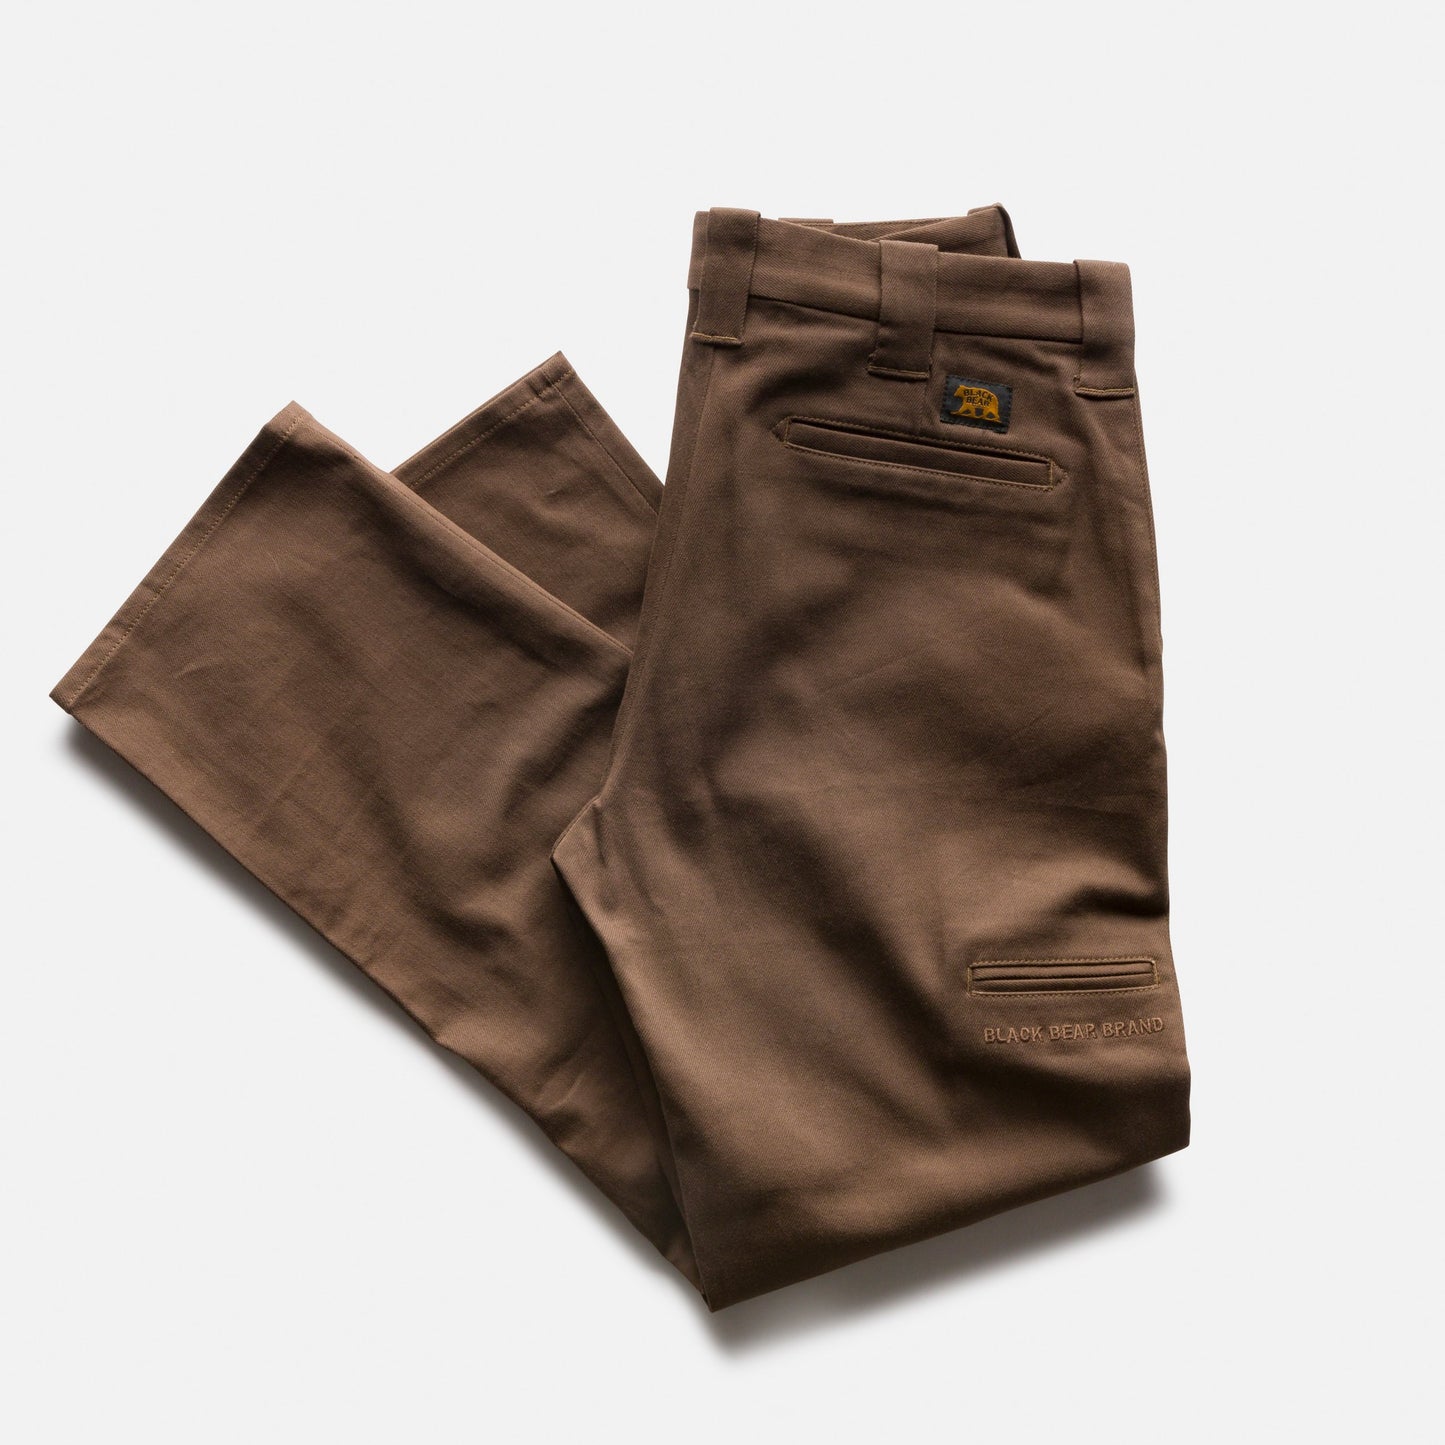 the Black Bear Brand SKATE Pant (Brown)